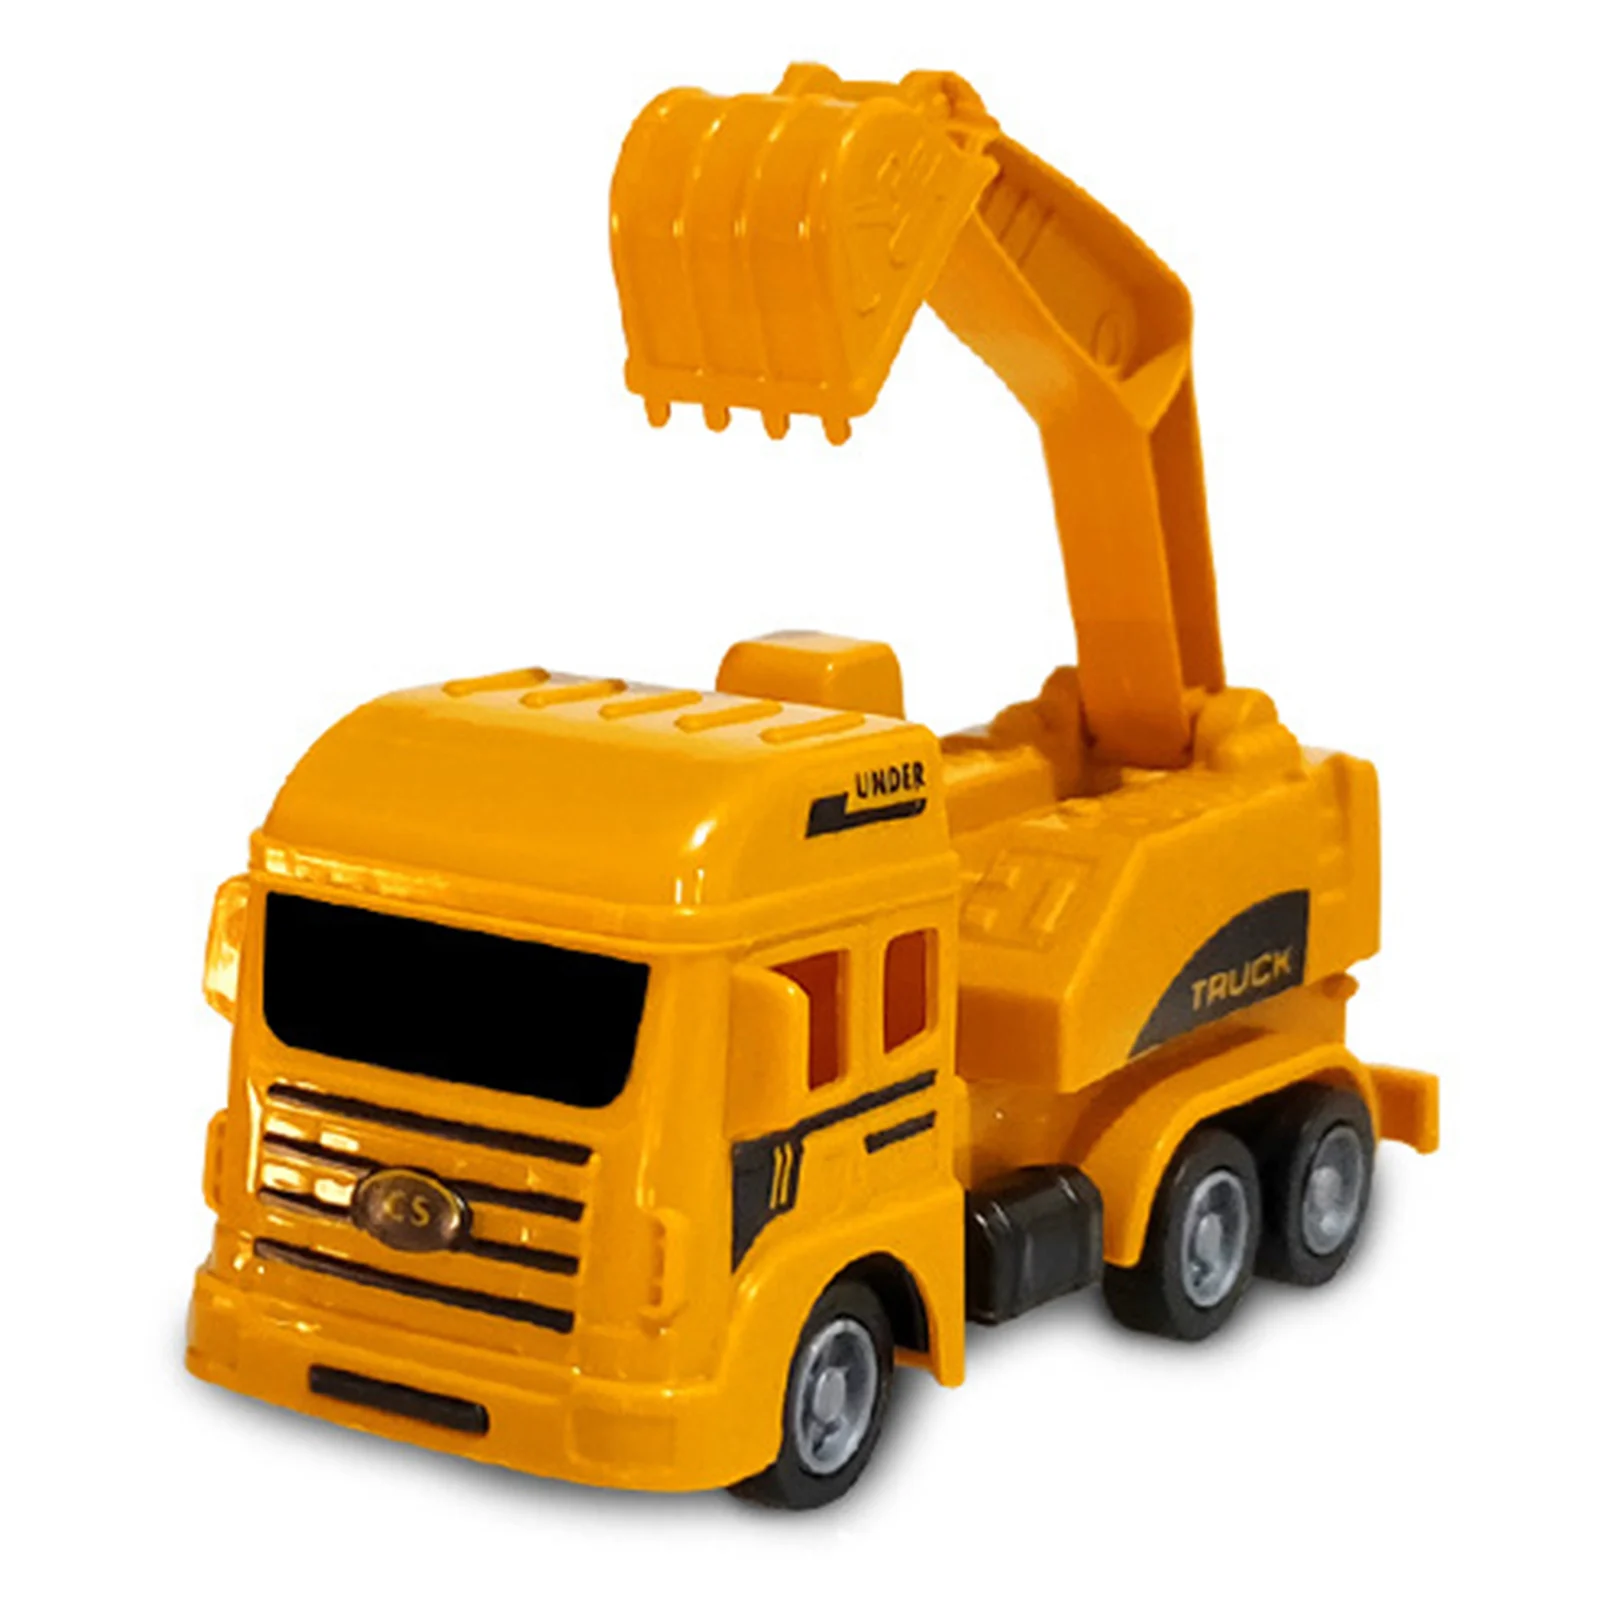 

Construction Vehicle Toy Set Tower Crane Truck Dump Trucks Excavator Cement Mixer Trucks for Children Kids Boys and Girls